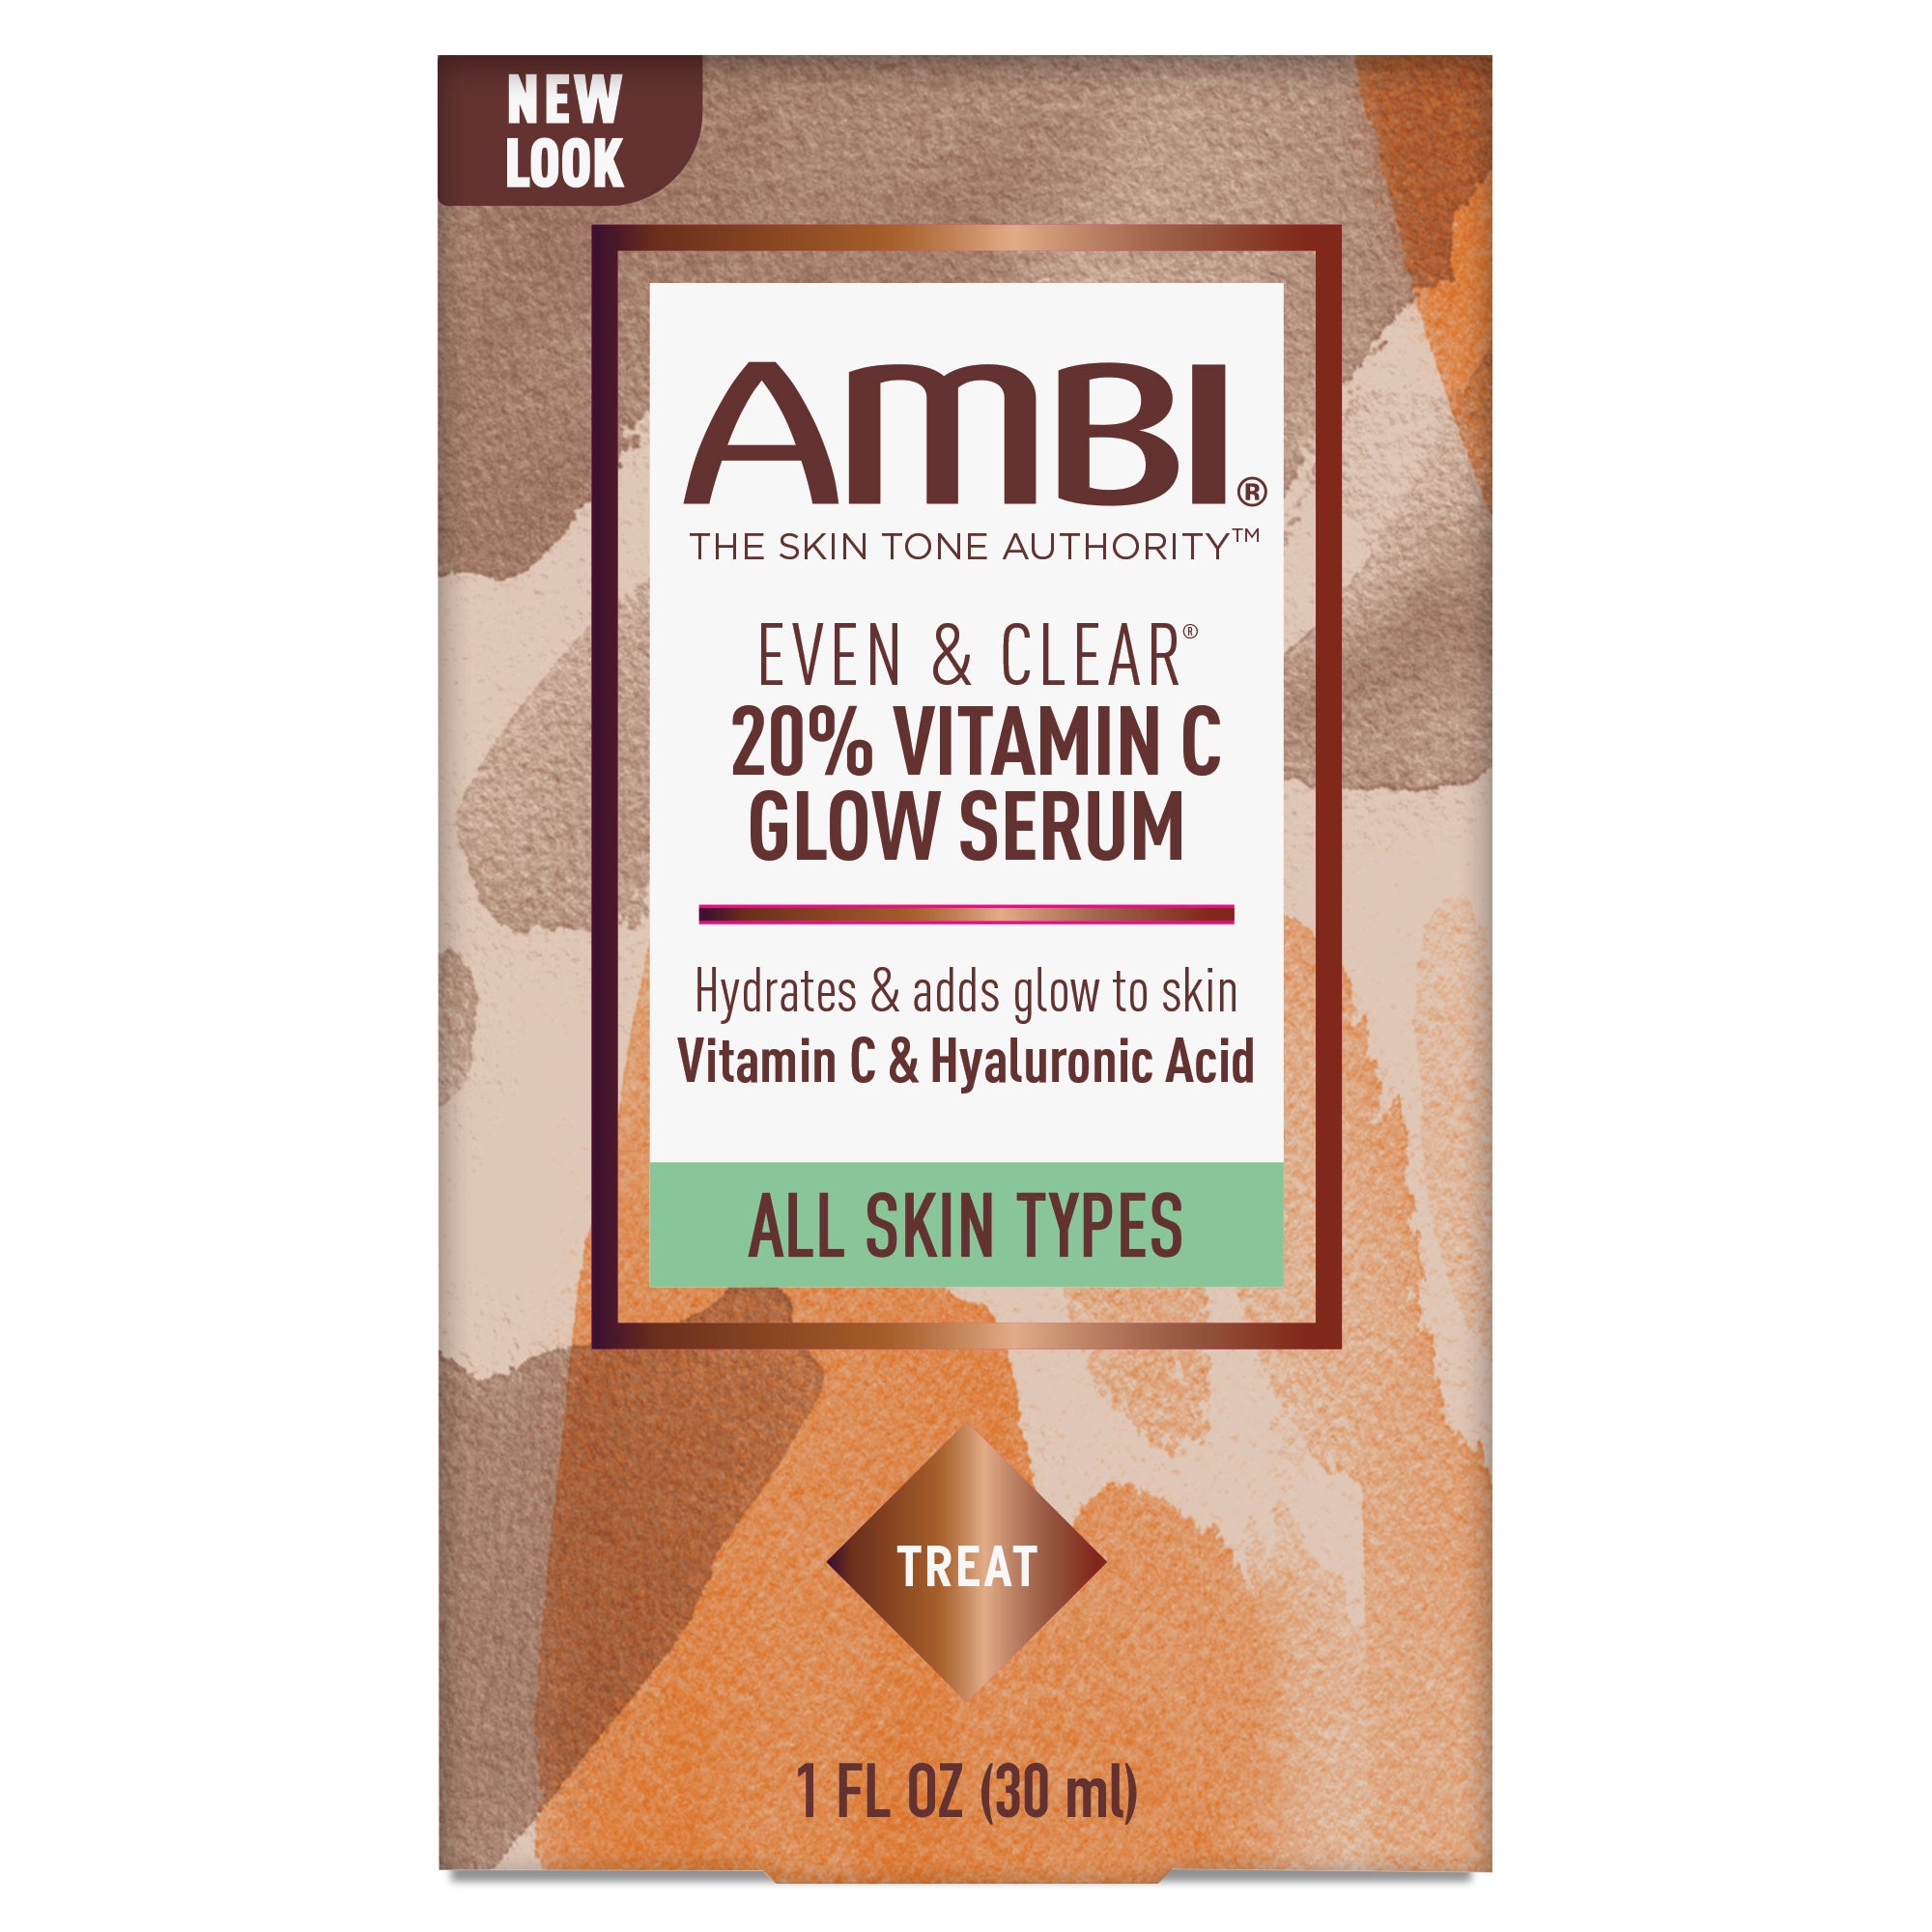 NEW! AMBI Even & Clear 20% Vitamin C Glow Serum